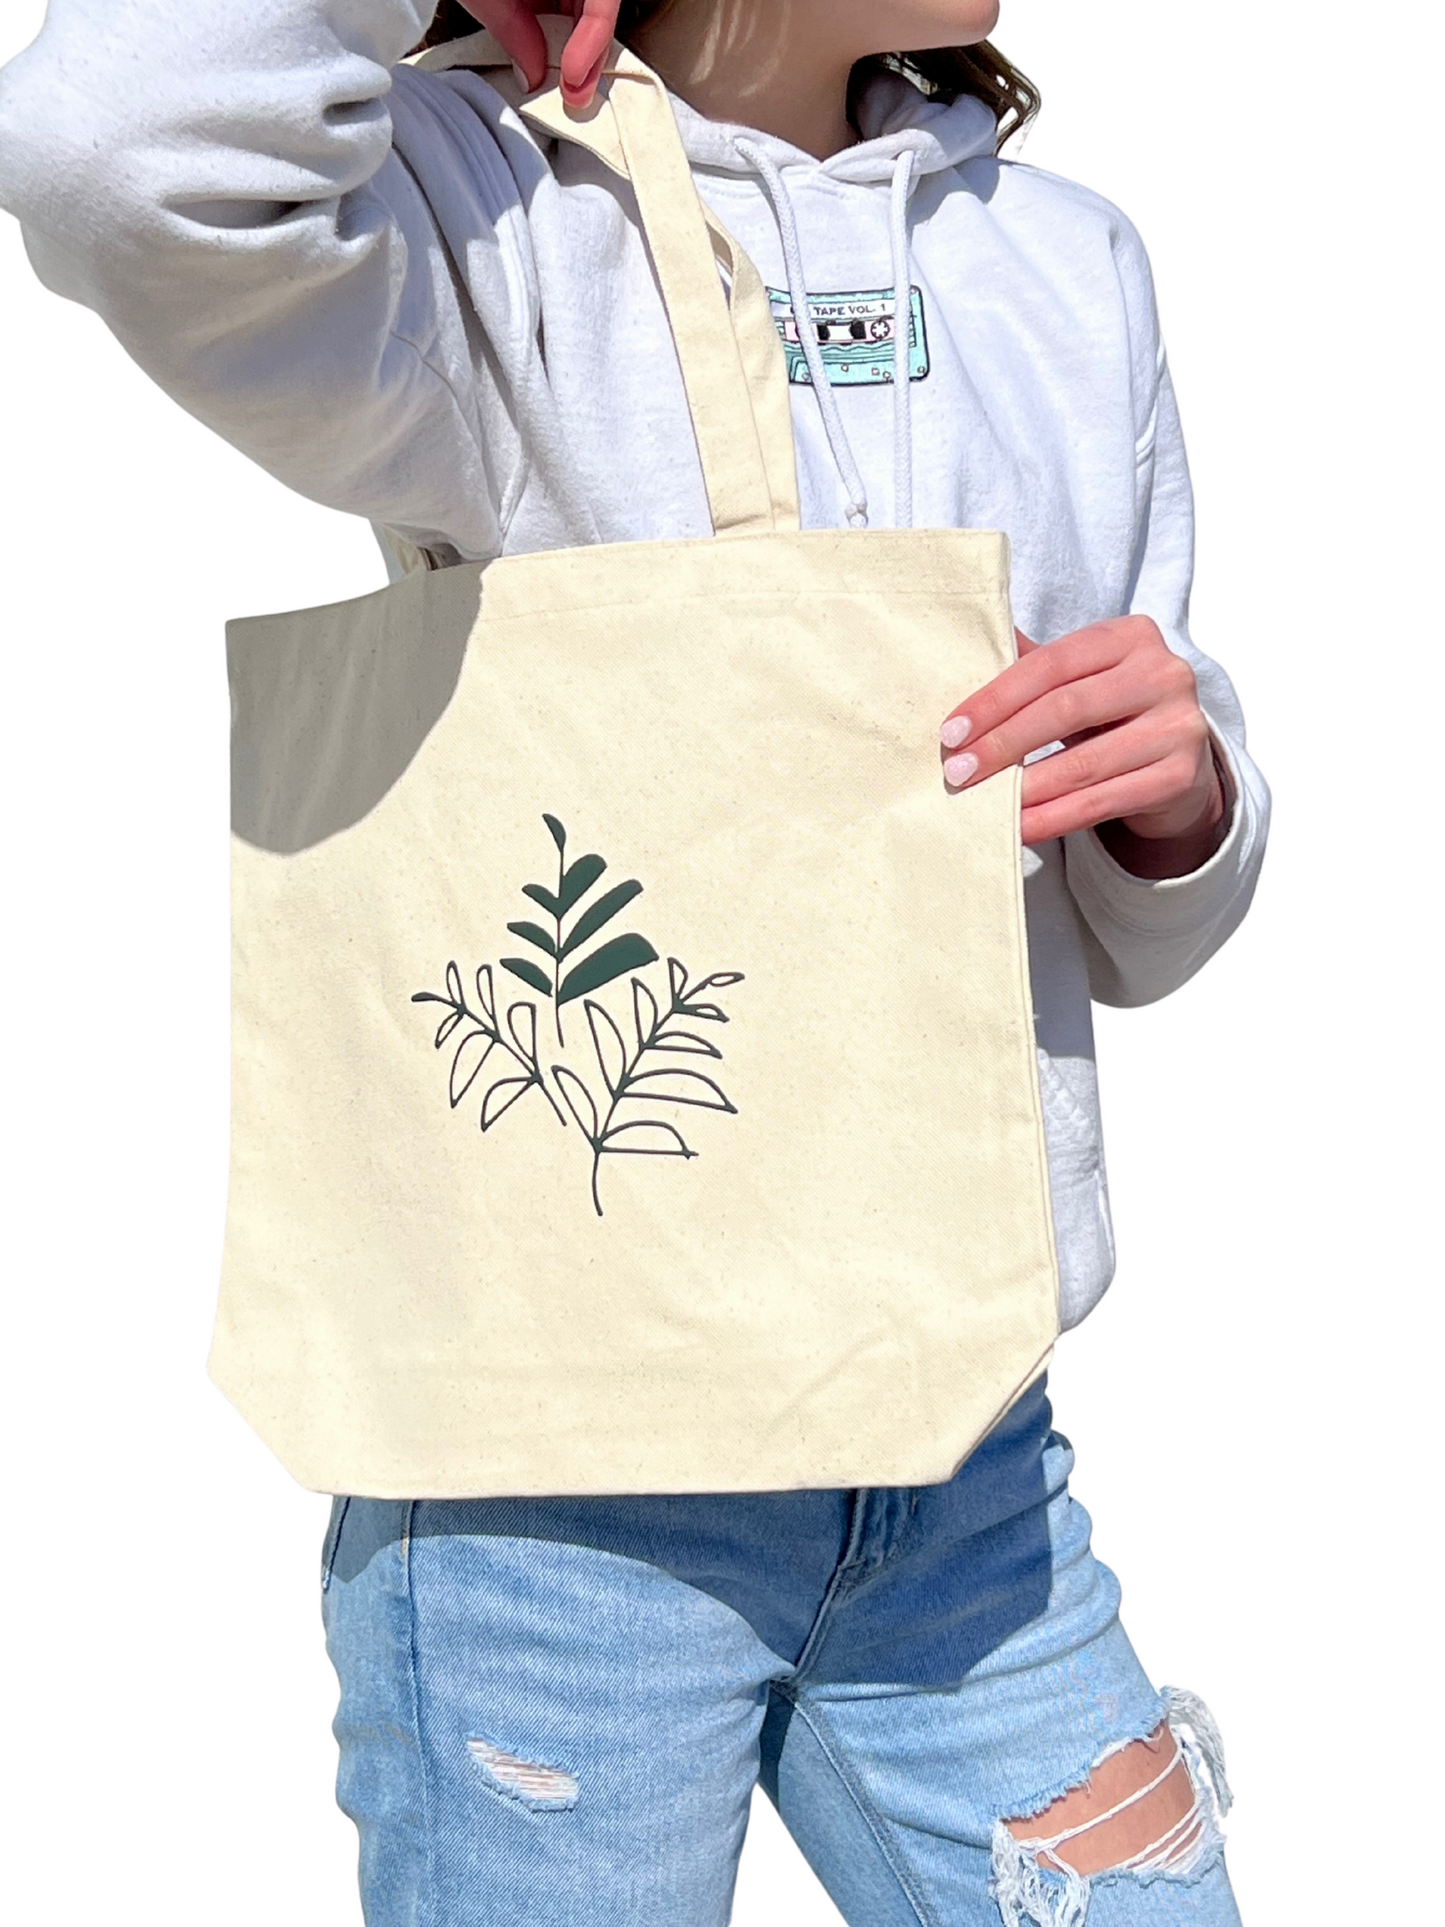 Plant Tote Bag